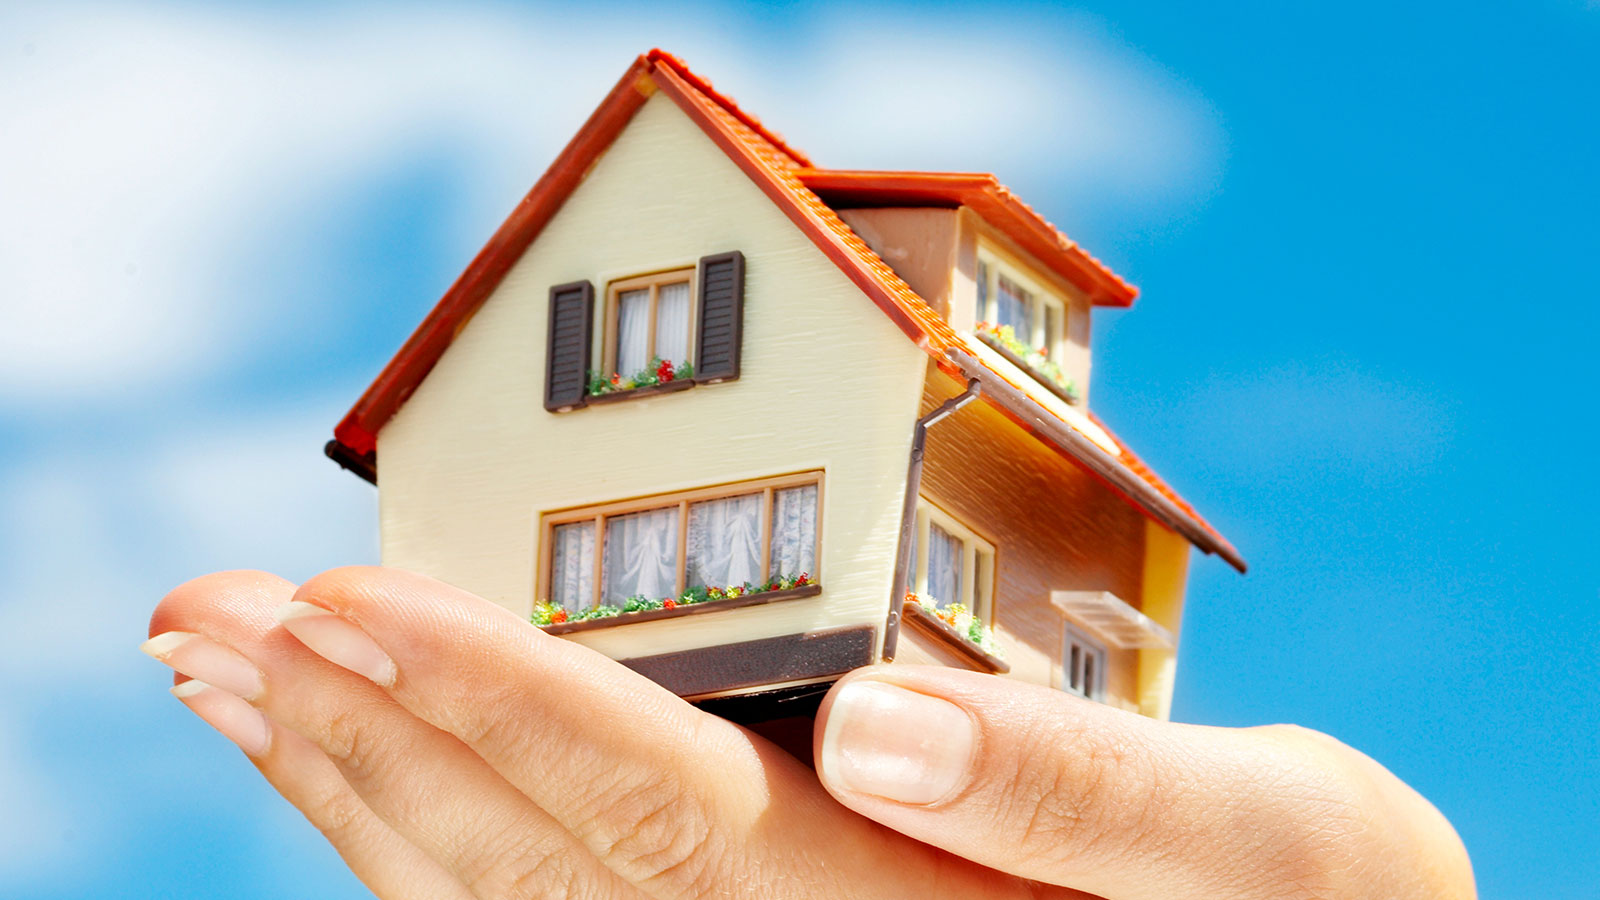 Apco Real Estate Loans - Home Loan Hd - HD Wallpaper 